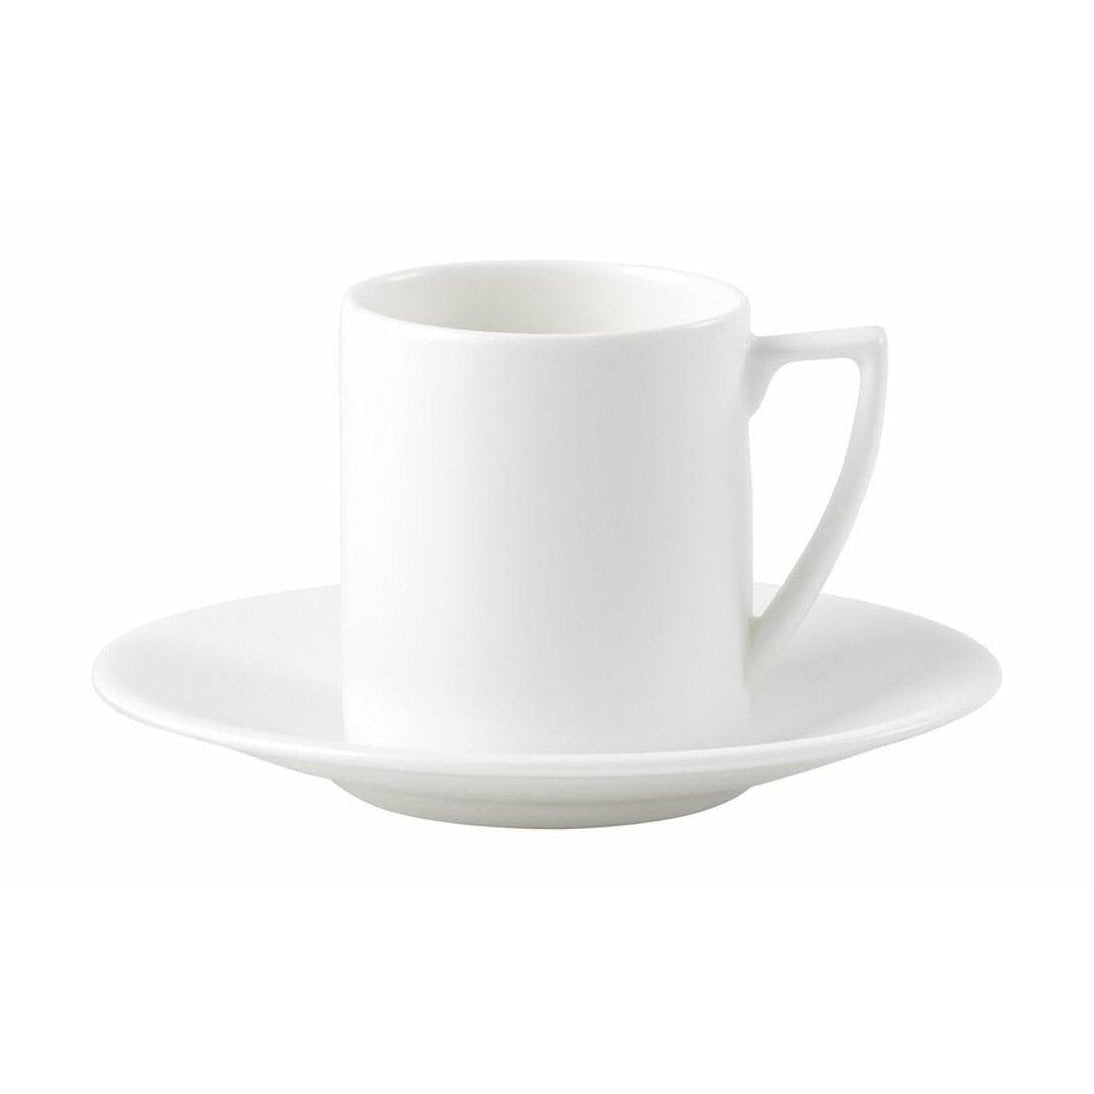 Wedgwood Jasper Conran White Espresso Cup & Saucet, 0,8 L